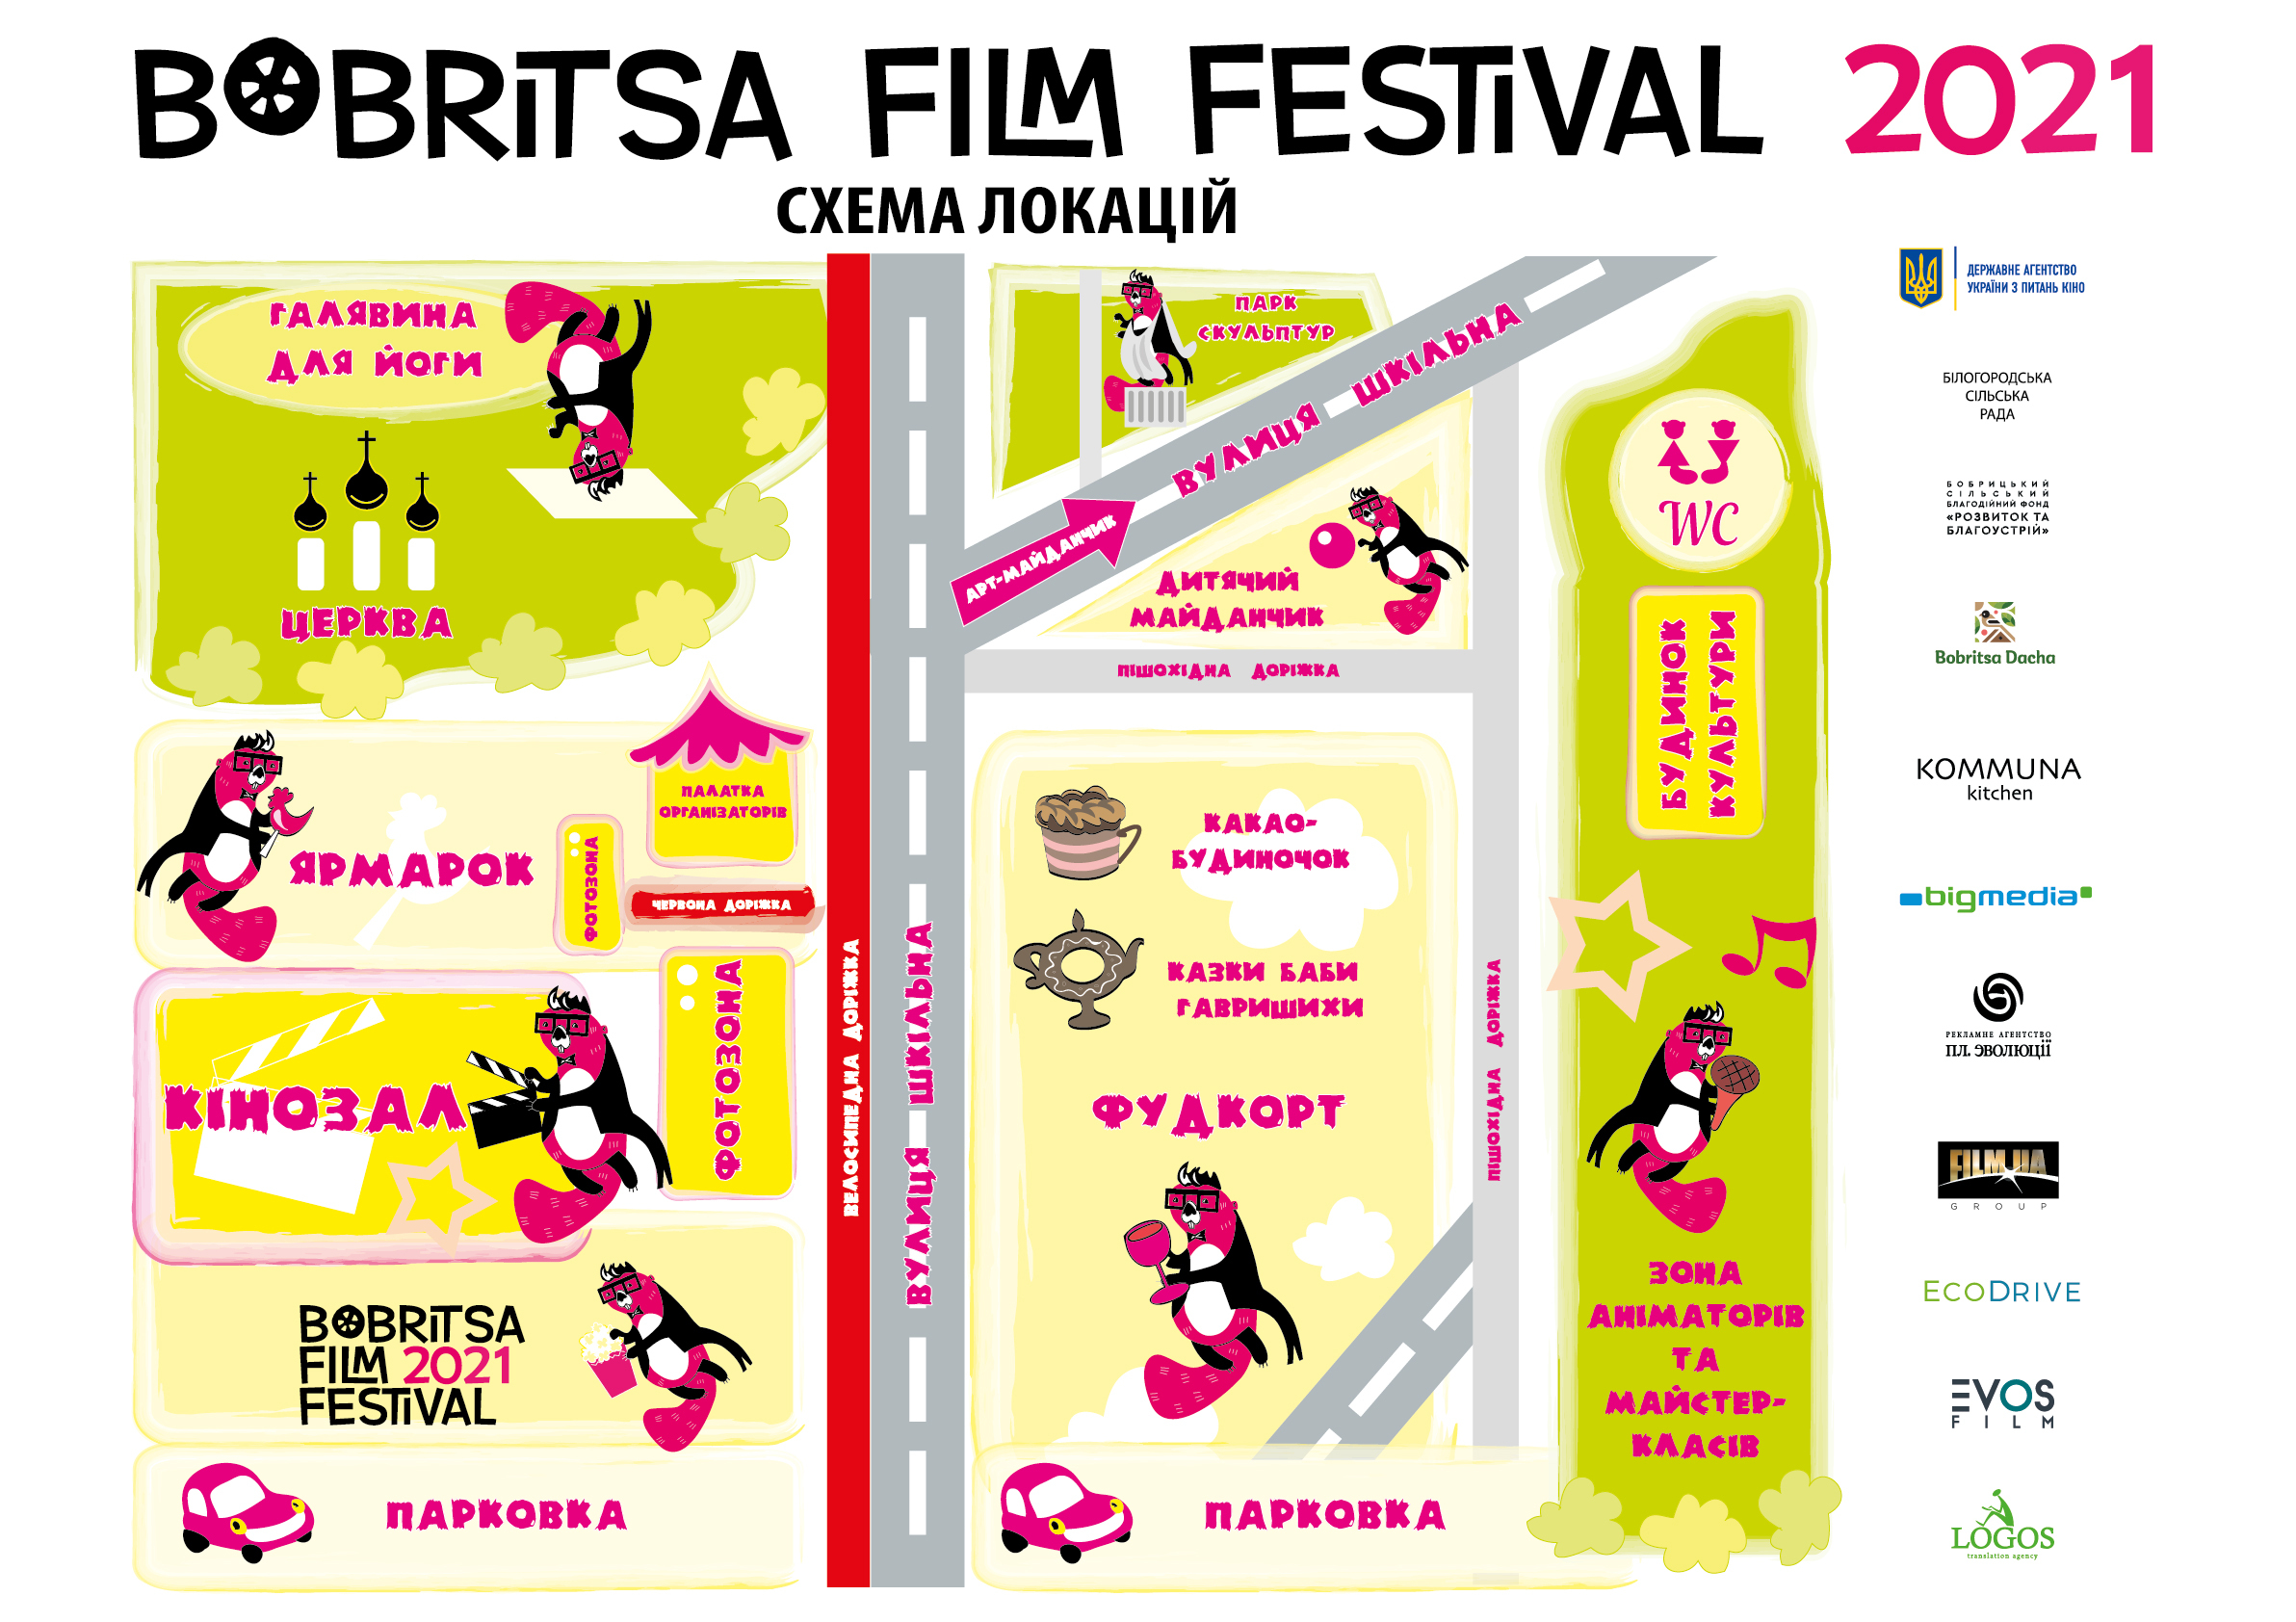 Bobritsa Film Festival - Як доїхати